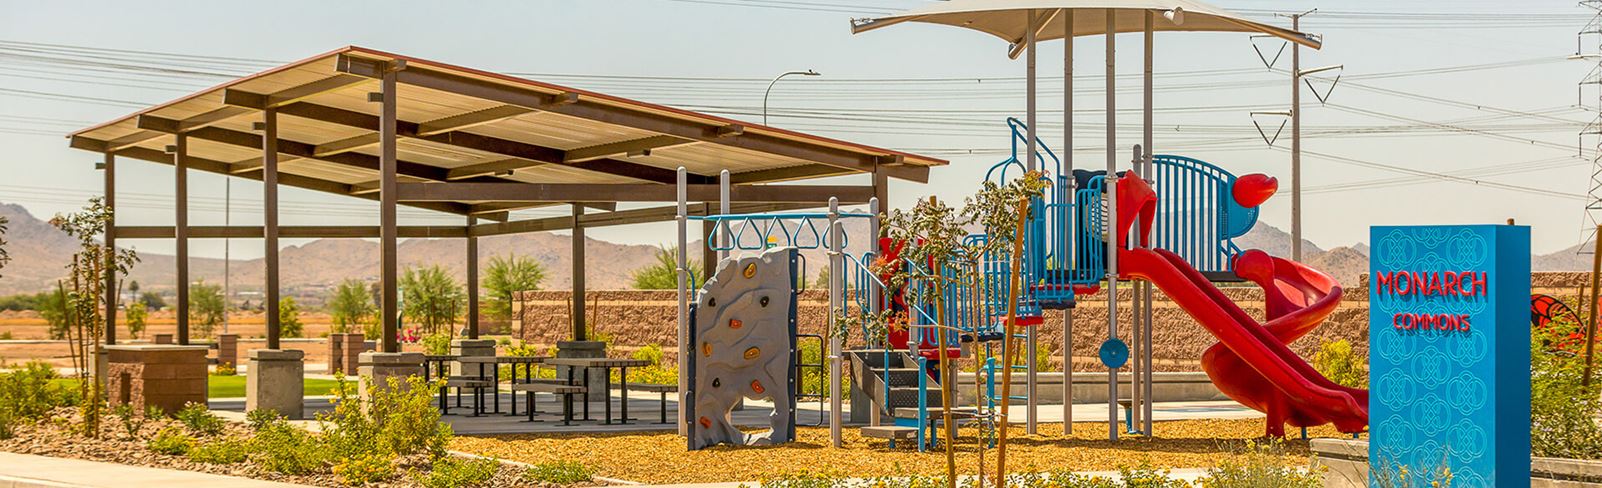 Monarch Commons Park playground at Alamar community in Avondale, Arizona